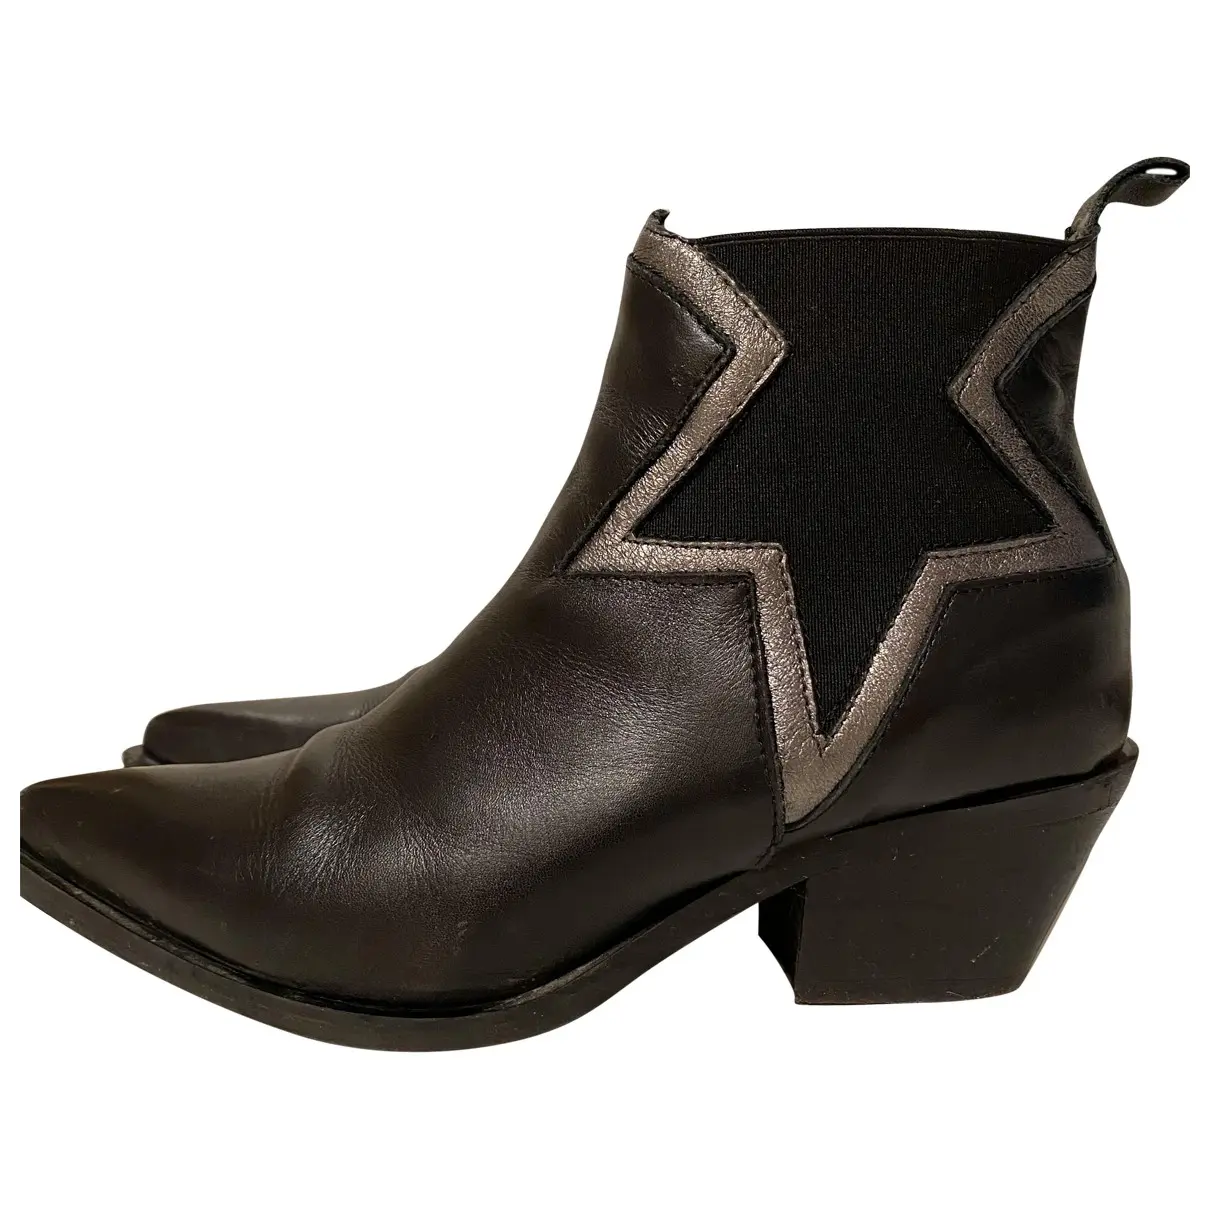 Leather cowboy boots Ovye